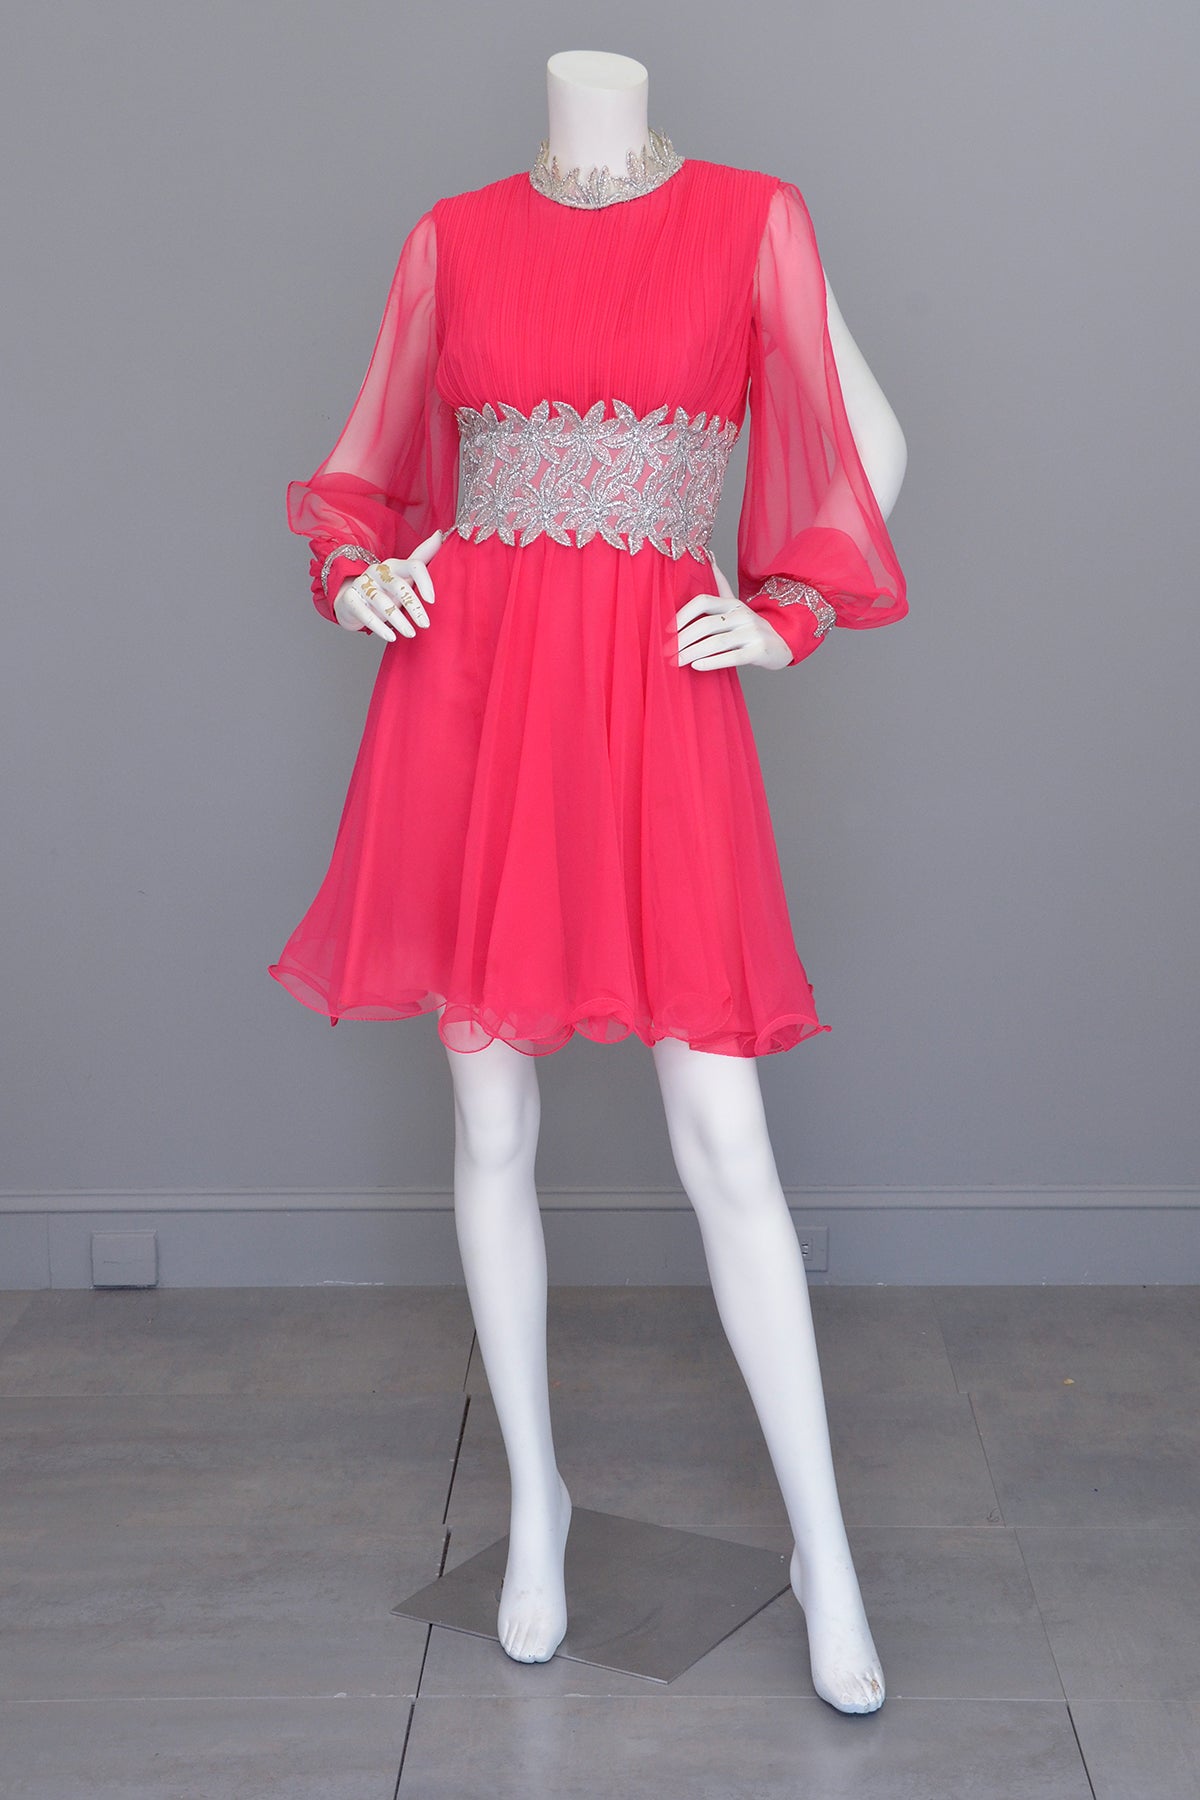 1960s Hot Pink Chiffon Party Dress with Silver Lamé Waistline | Disco Dress